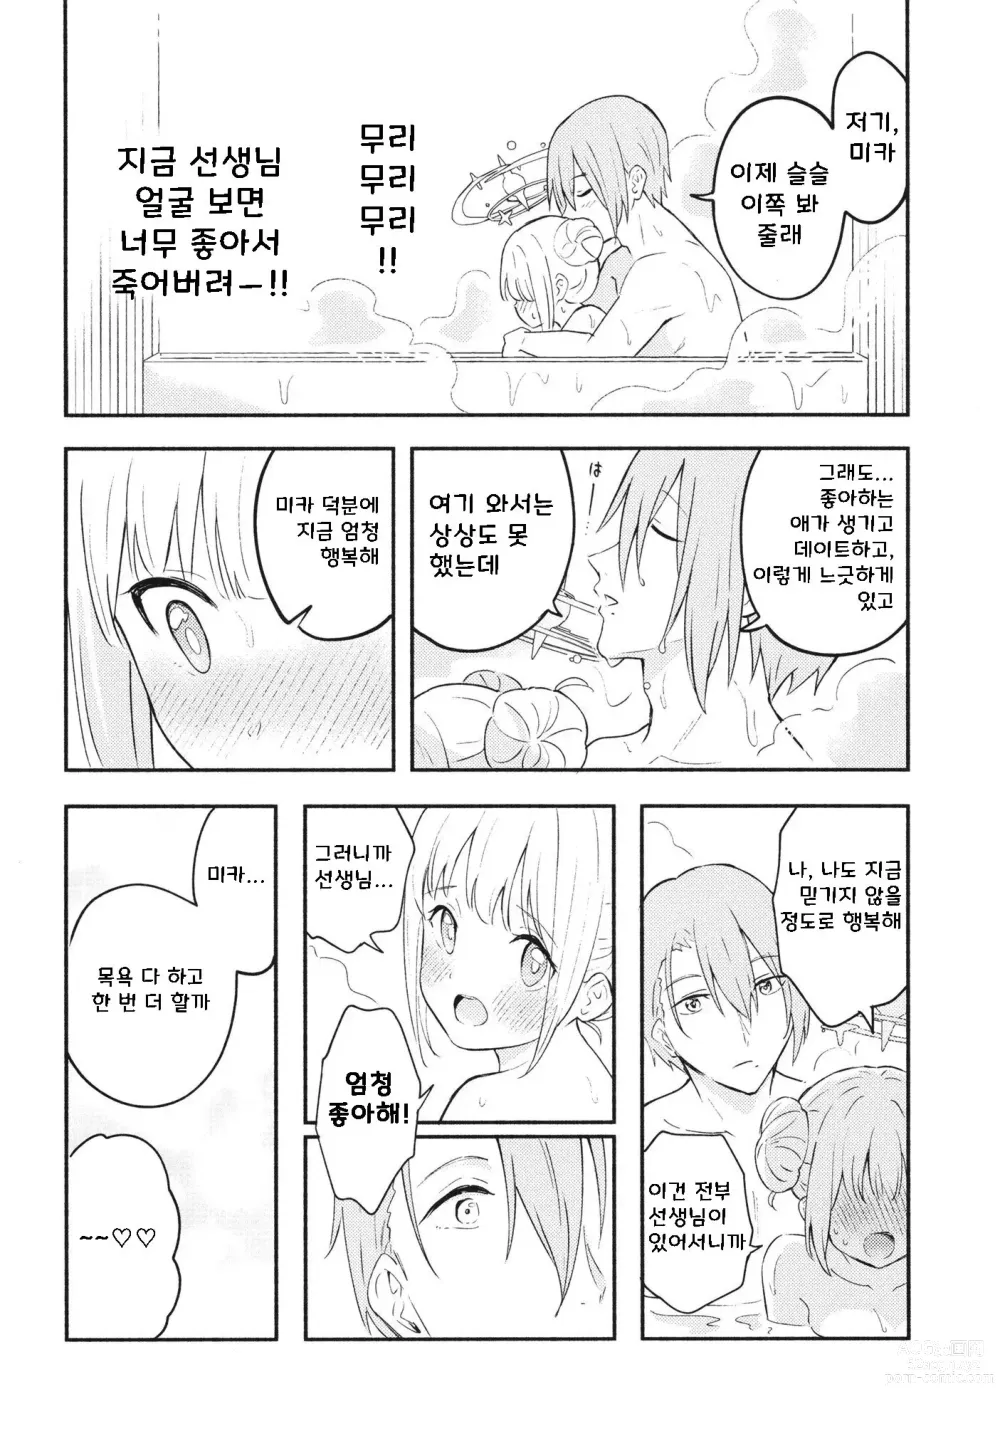 Page 19 of doujinshi 미소노 미카는 선생님에게 너무 사랑 받는다